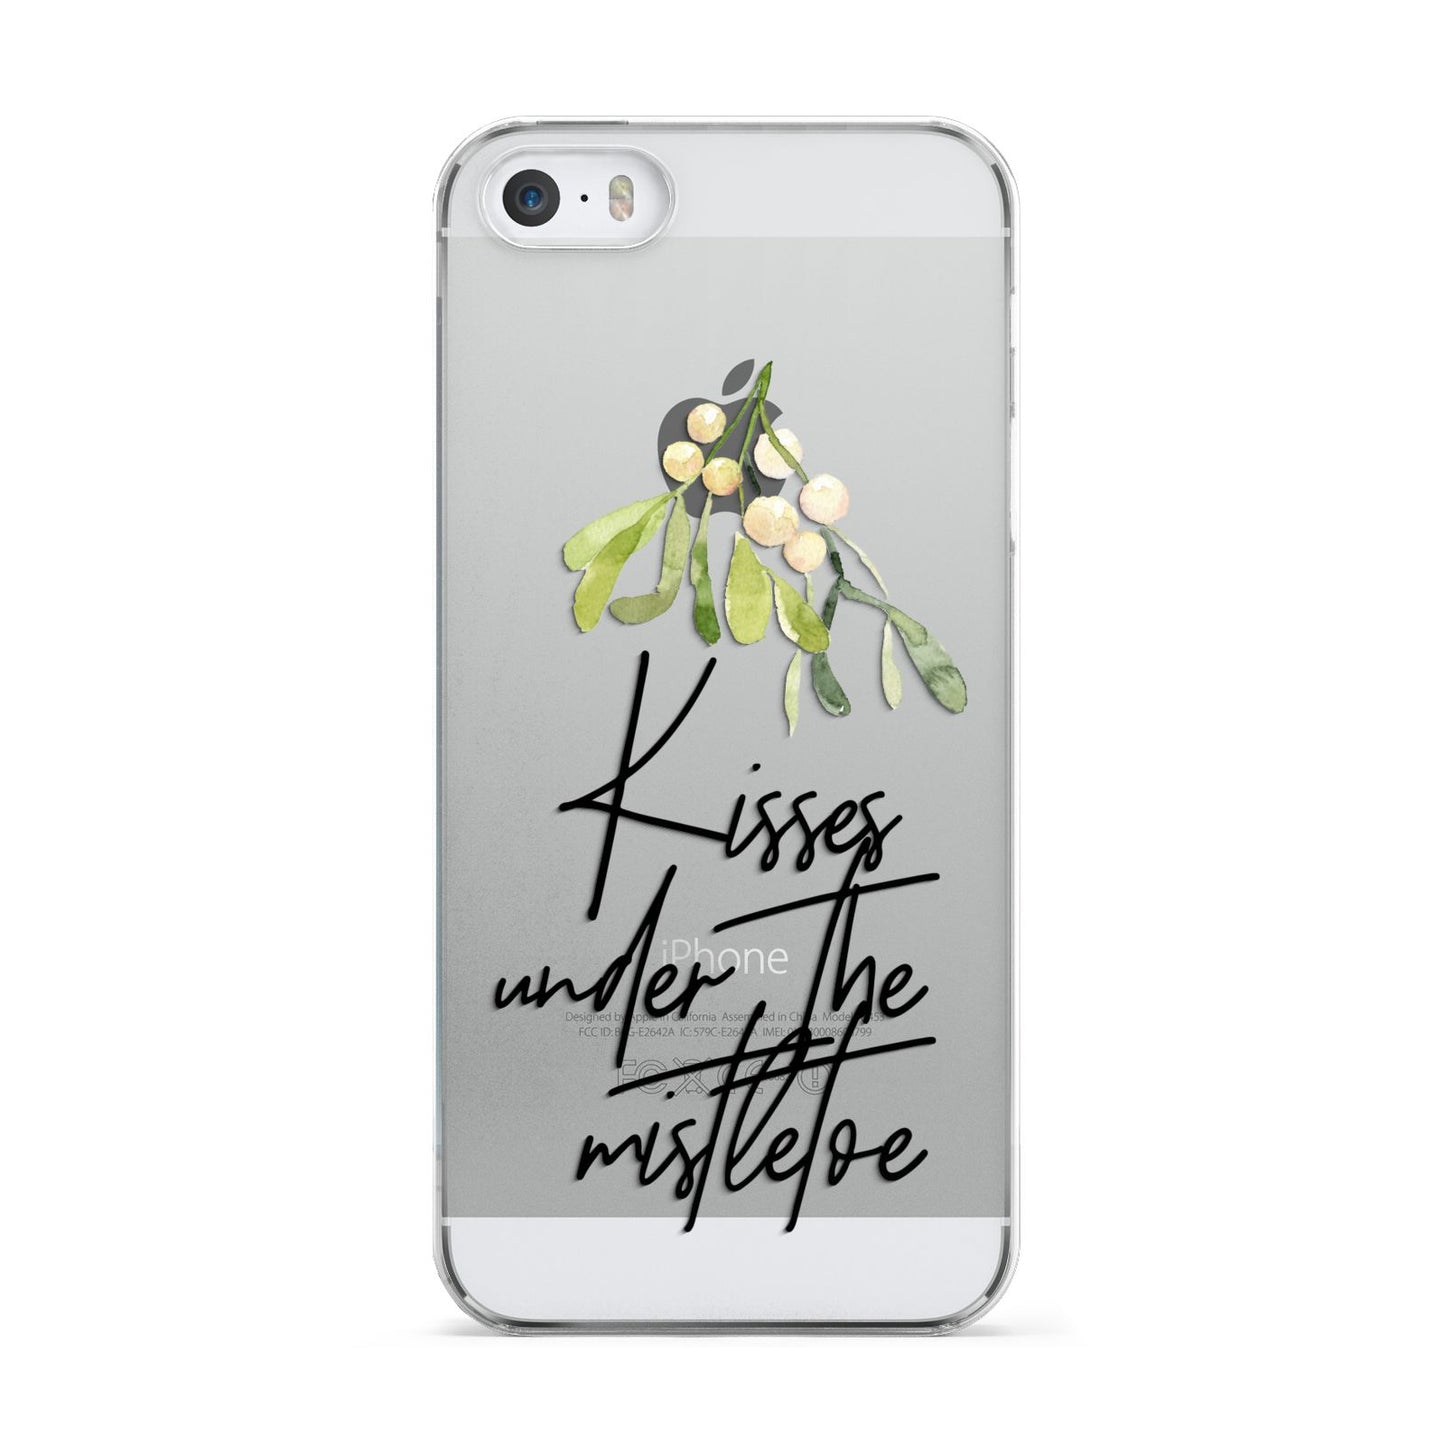 Kisses Under The Mistletoe Apple iPhone 5 Case